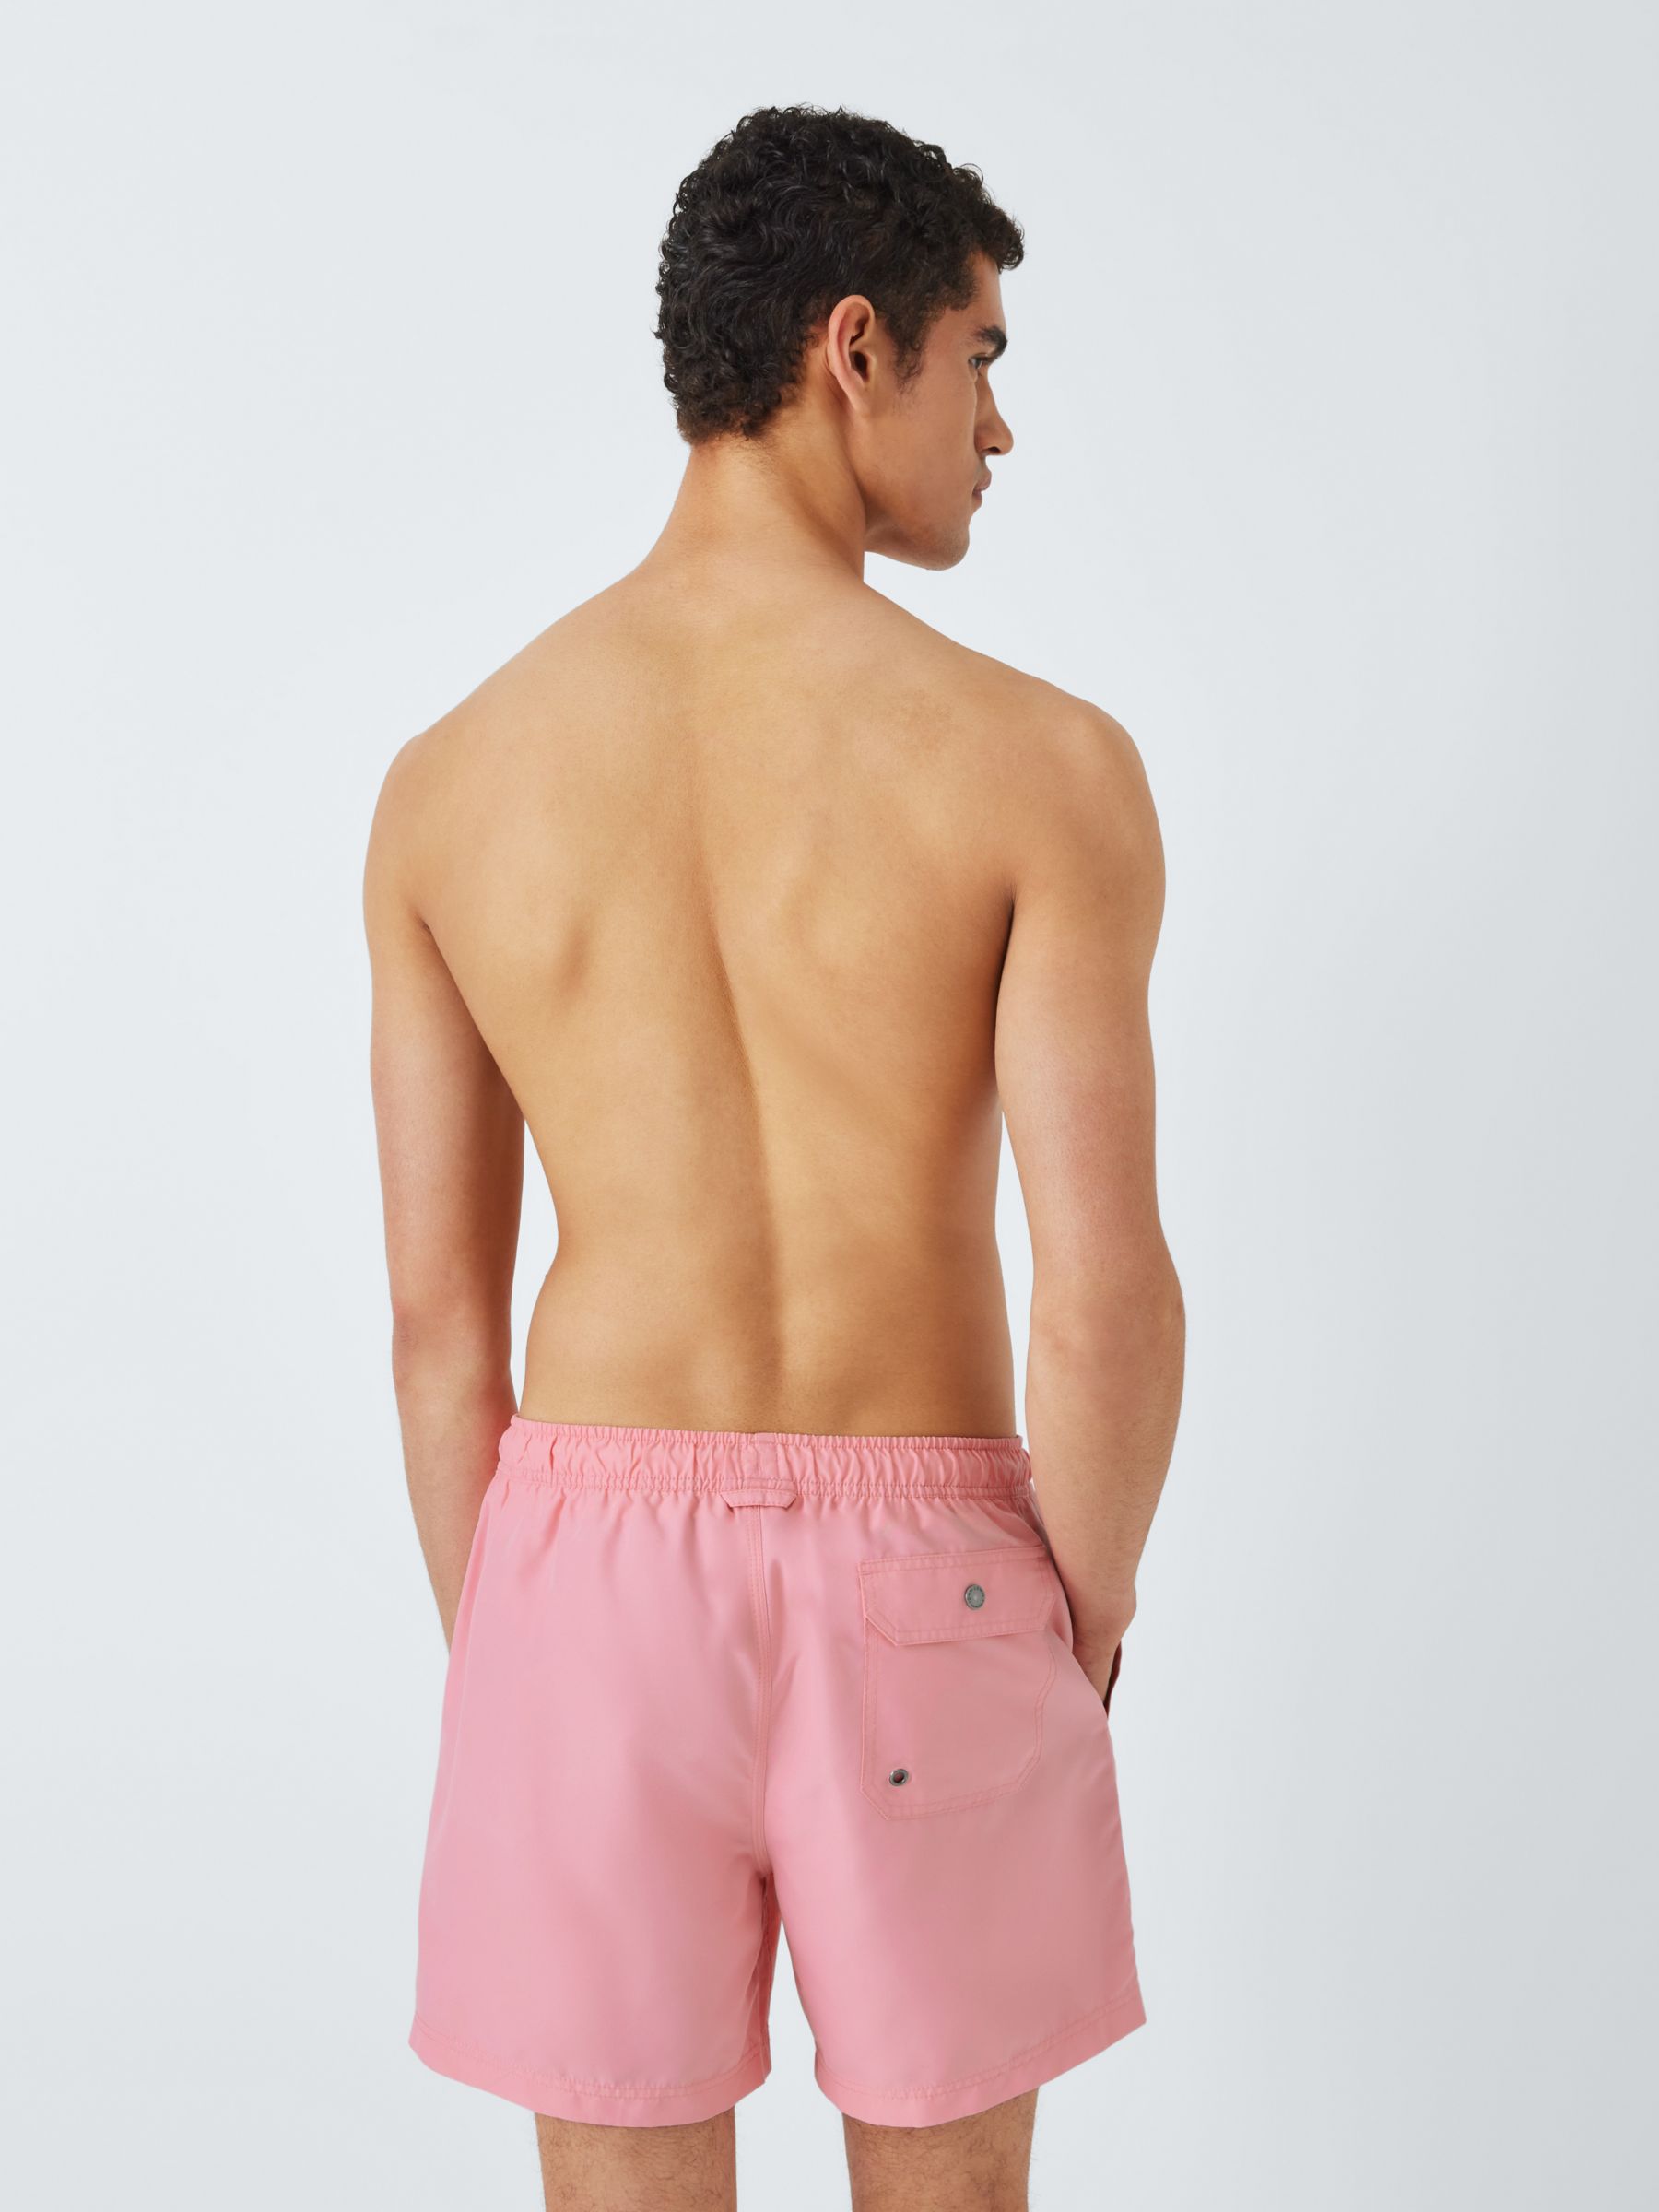 John Lewis Plain Swim Shorts, Pink, S